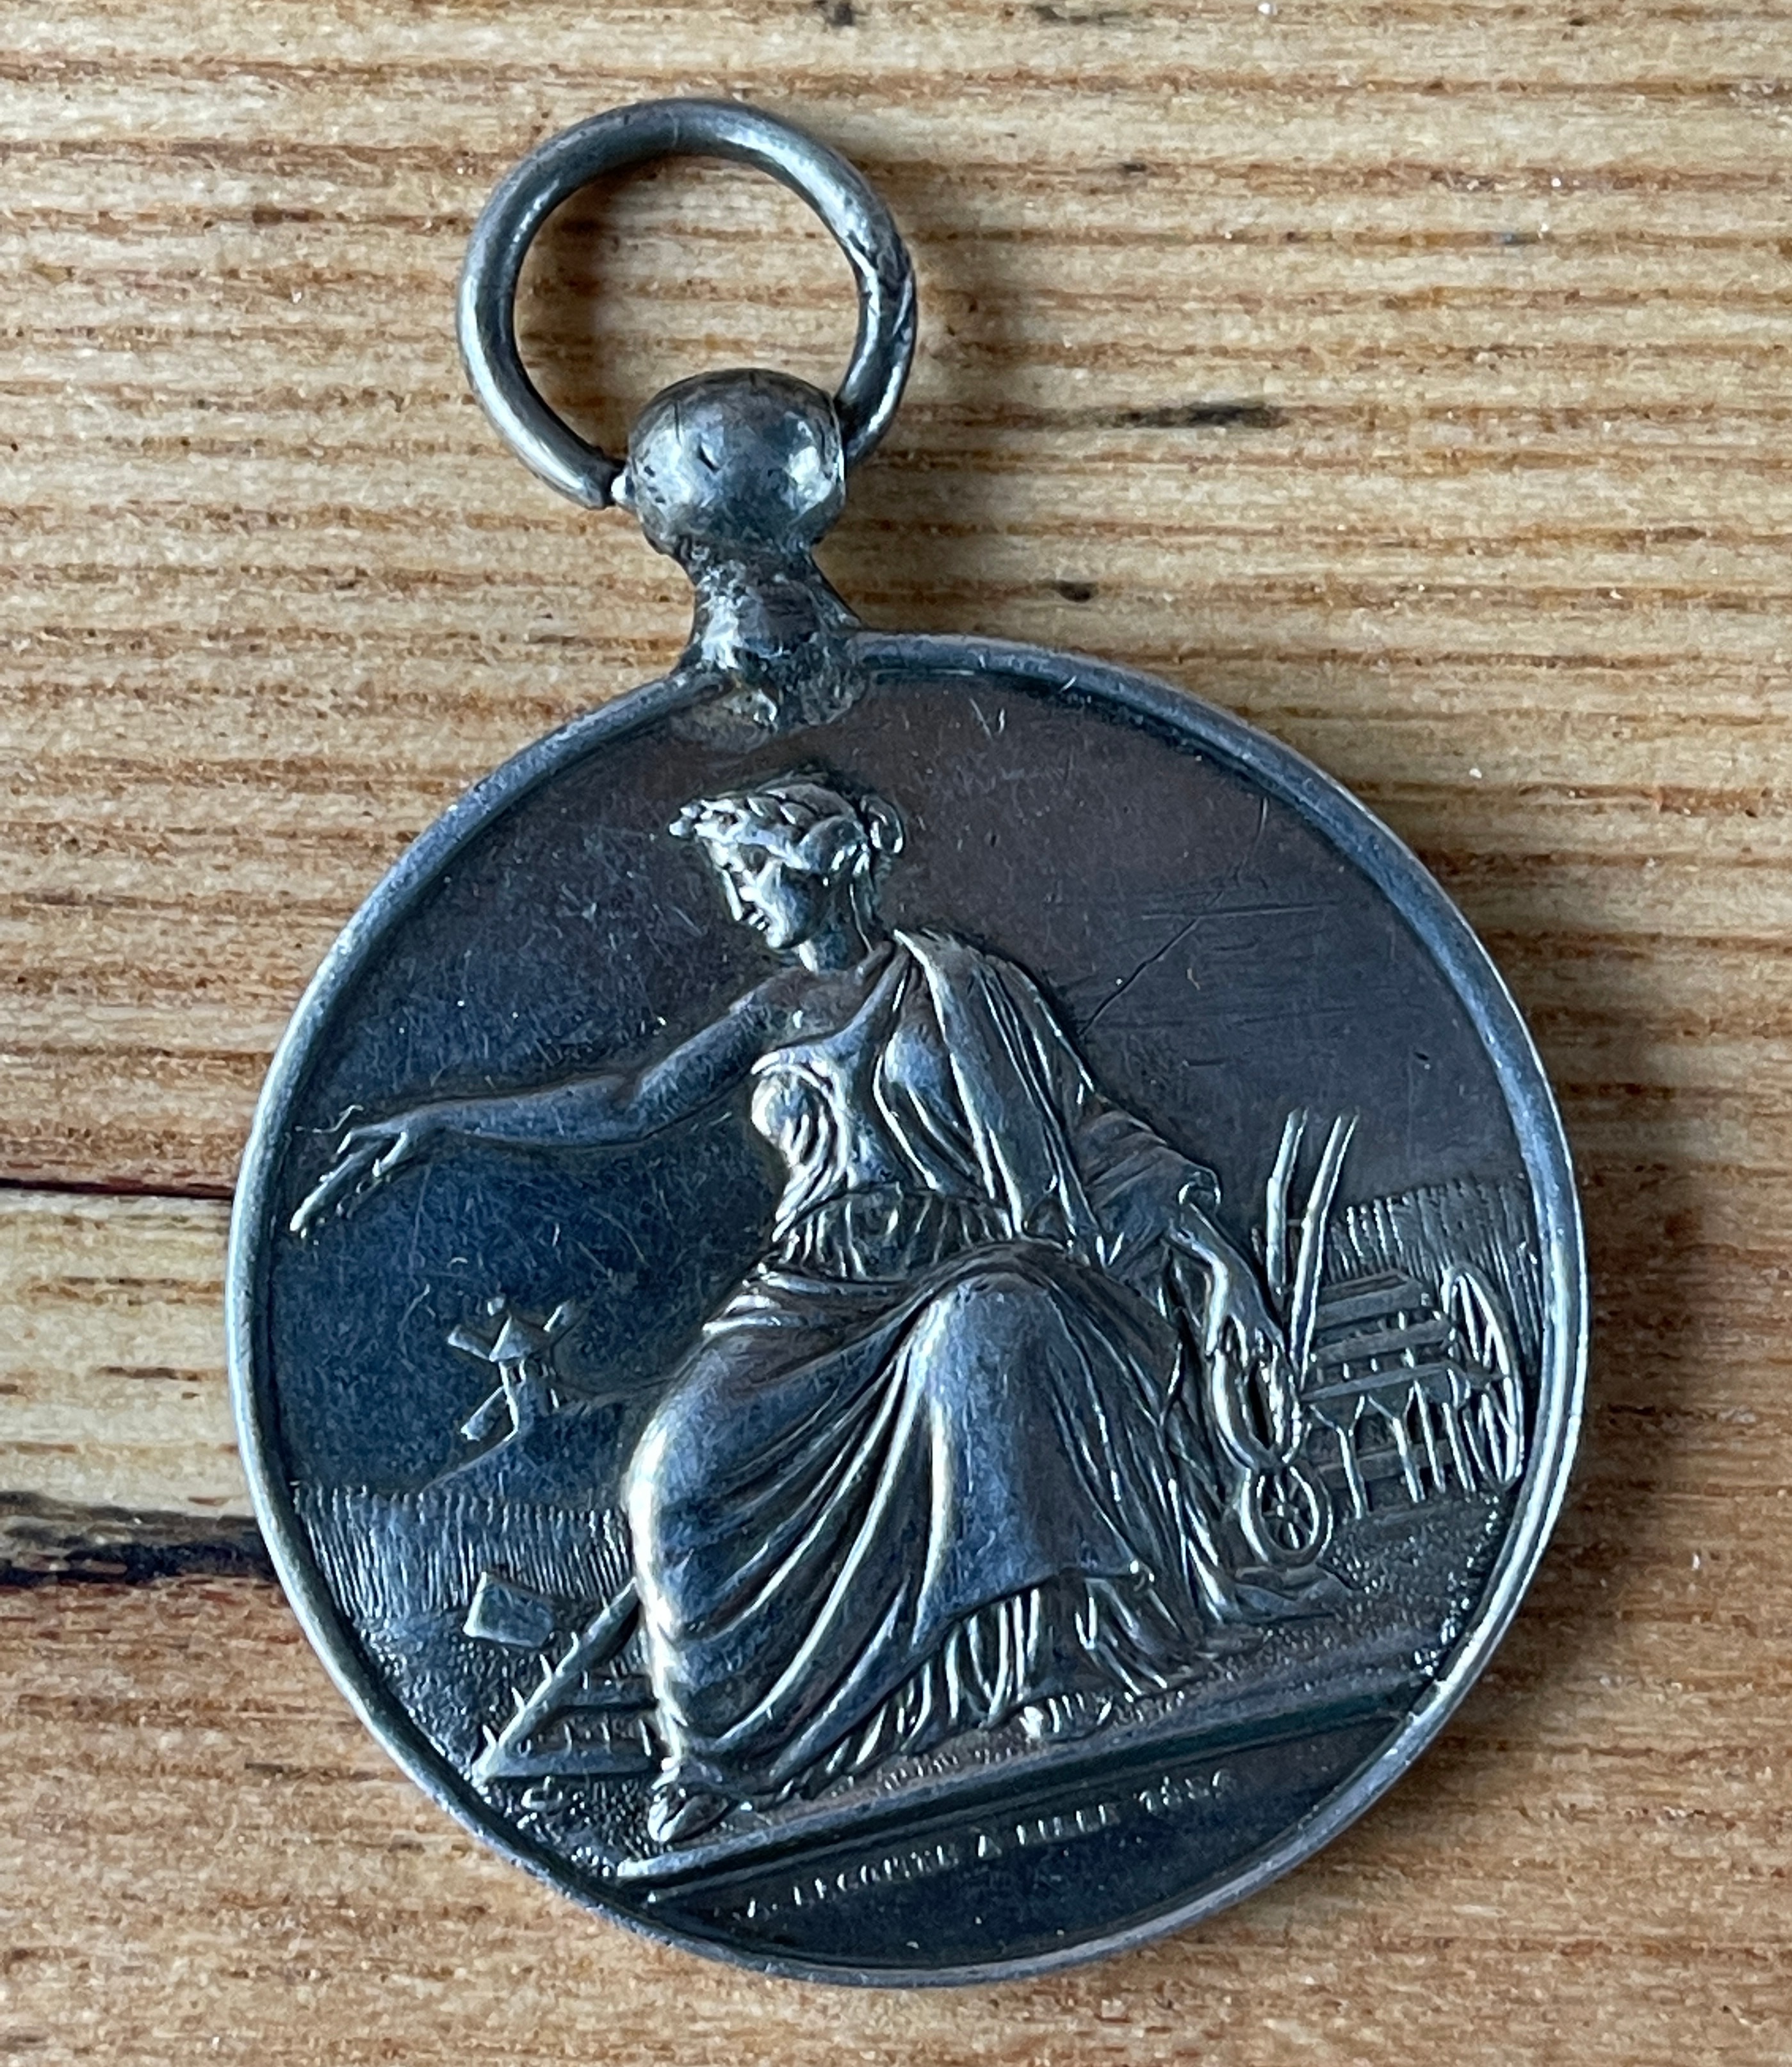 Lot of 4 Antique Agricultural Medals - British Dairymaids Association-Sir Edward Bart Medal etc. - Image 3 of 9